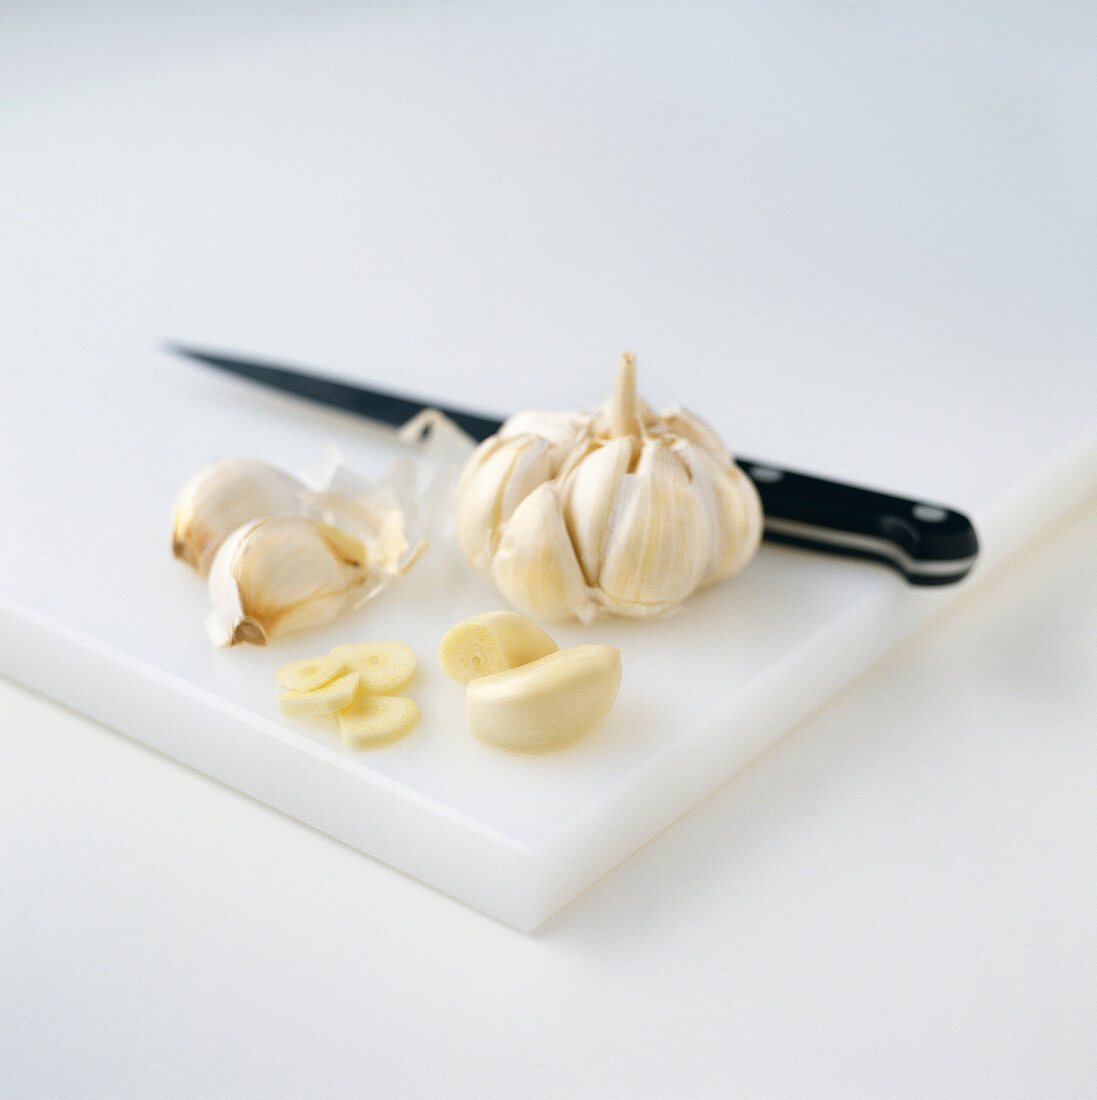 Garlic and knife on chopping board